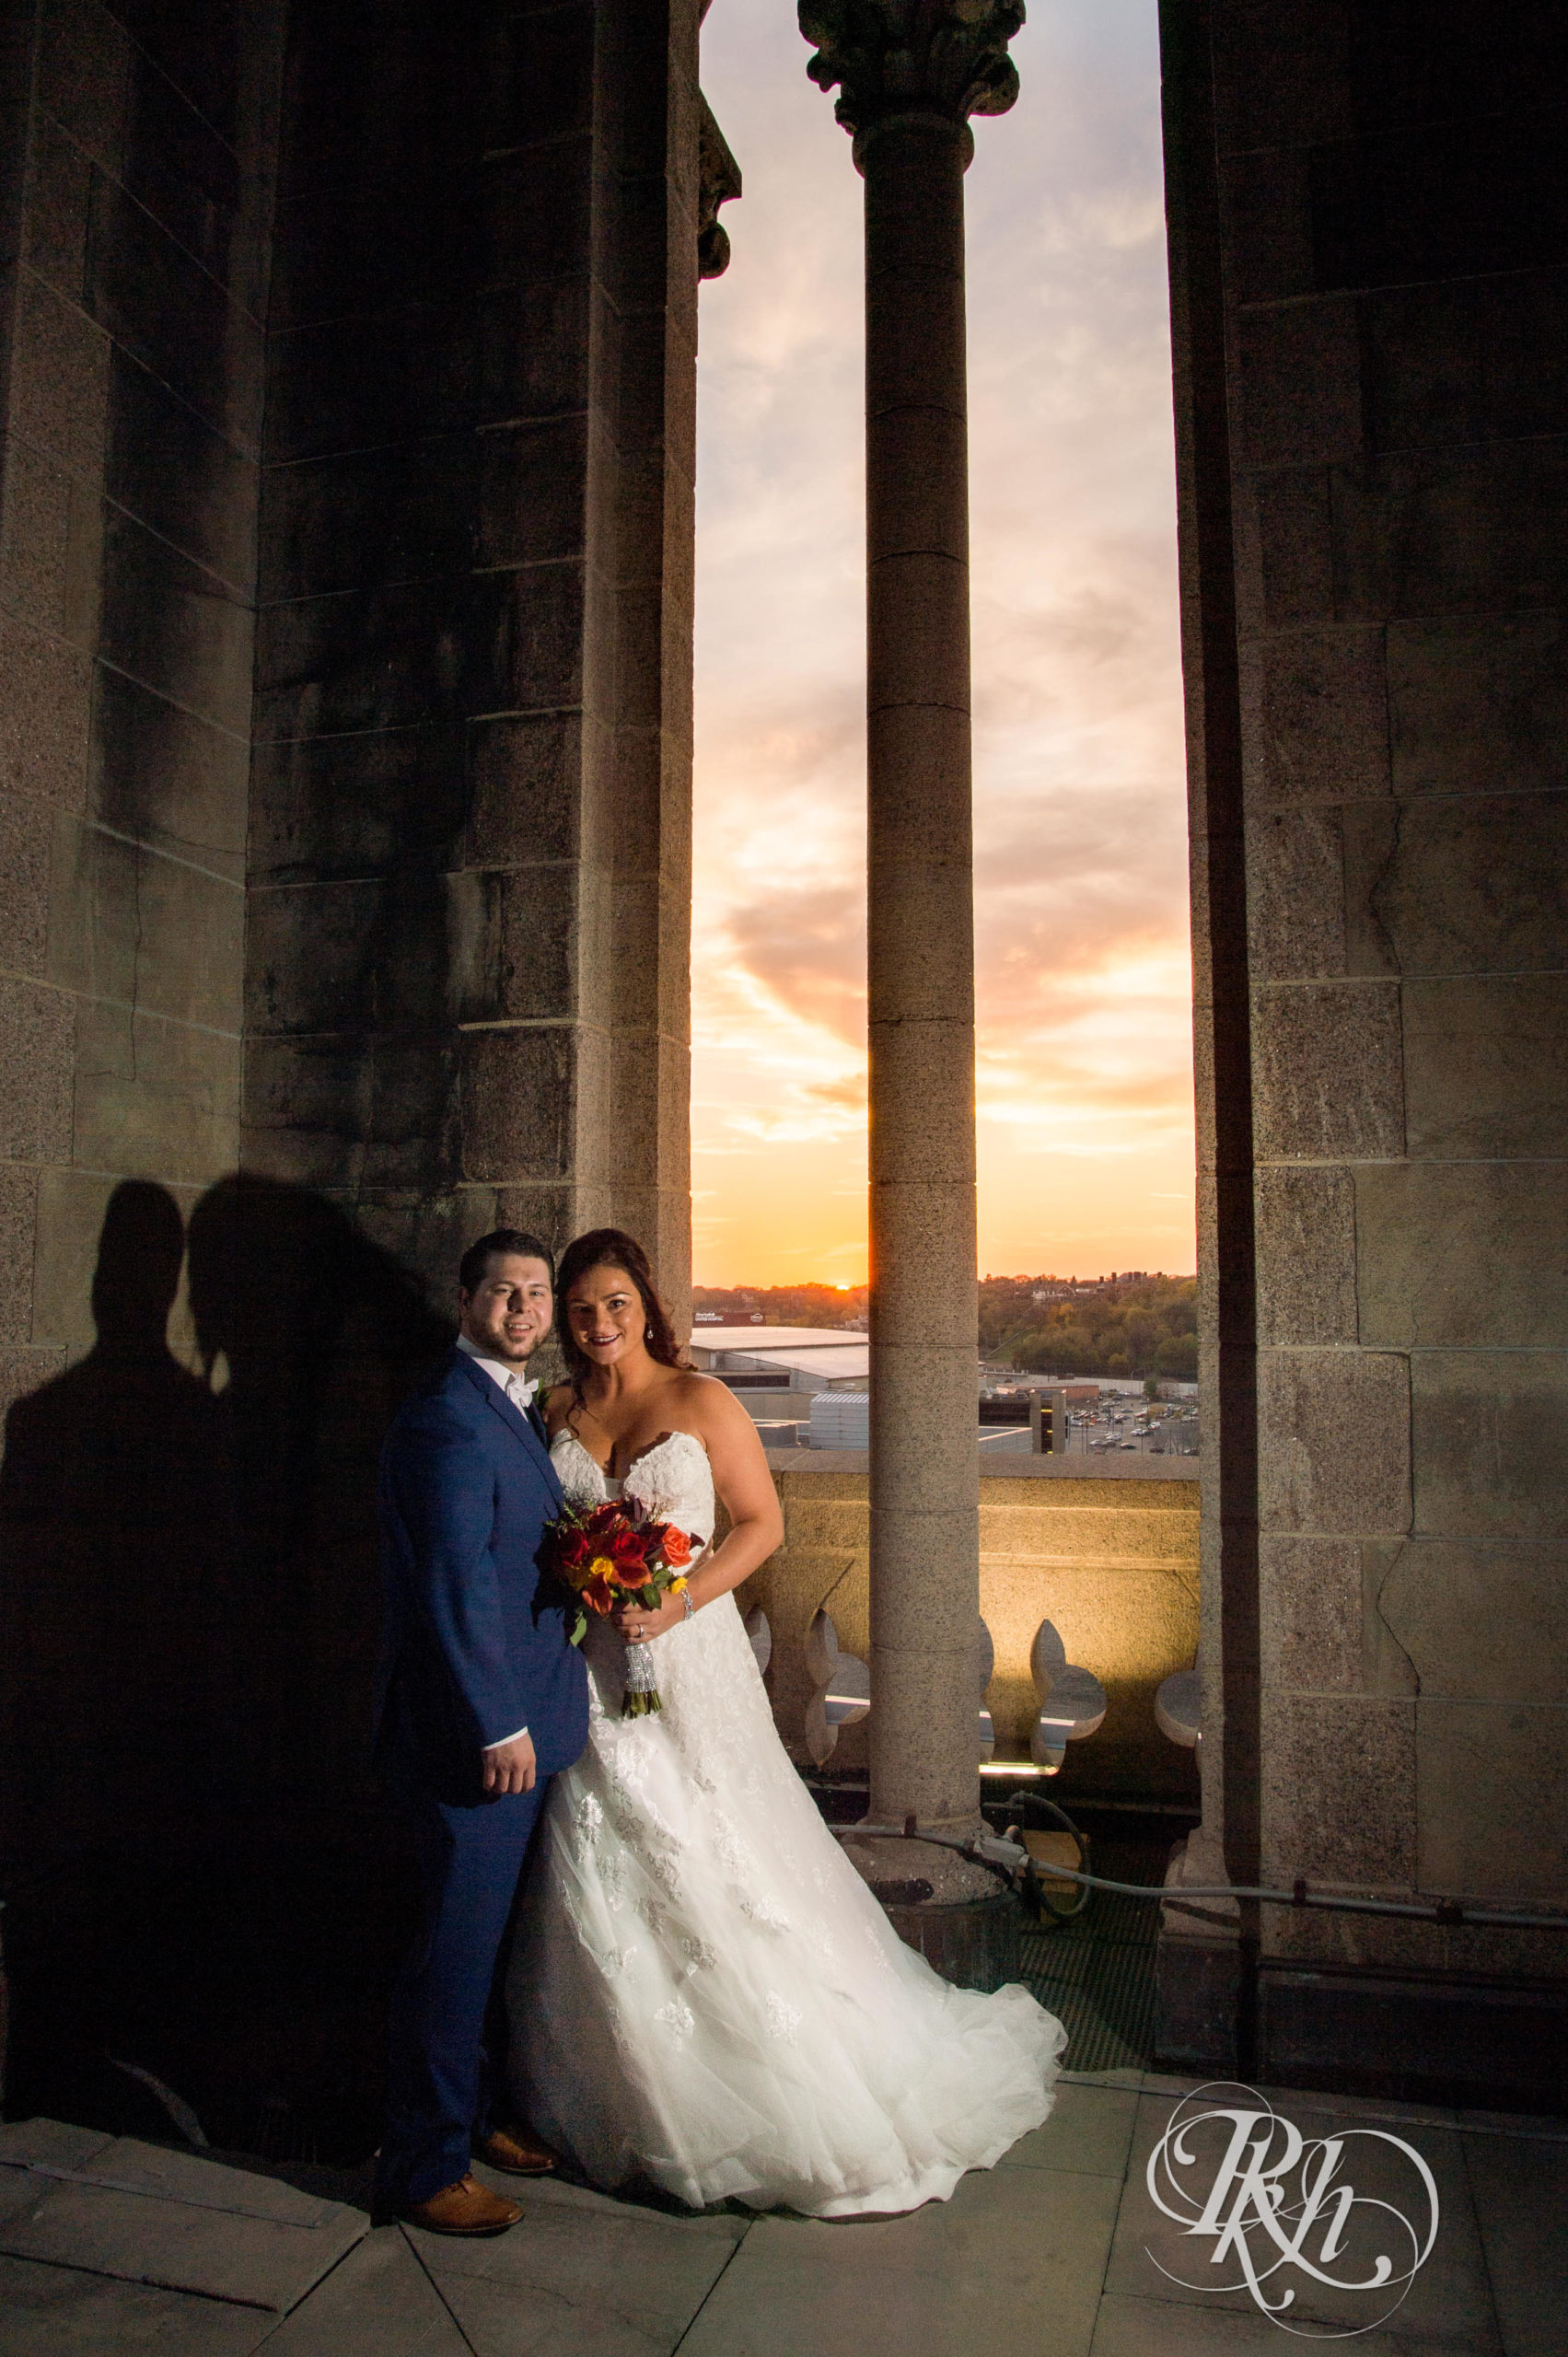 Bride and groom smile at sunset on wedding day at Landmark Center in Saint Paul, Minnesota.